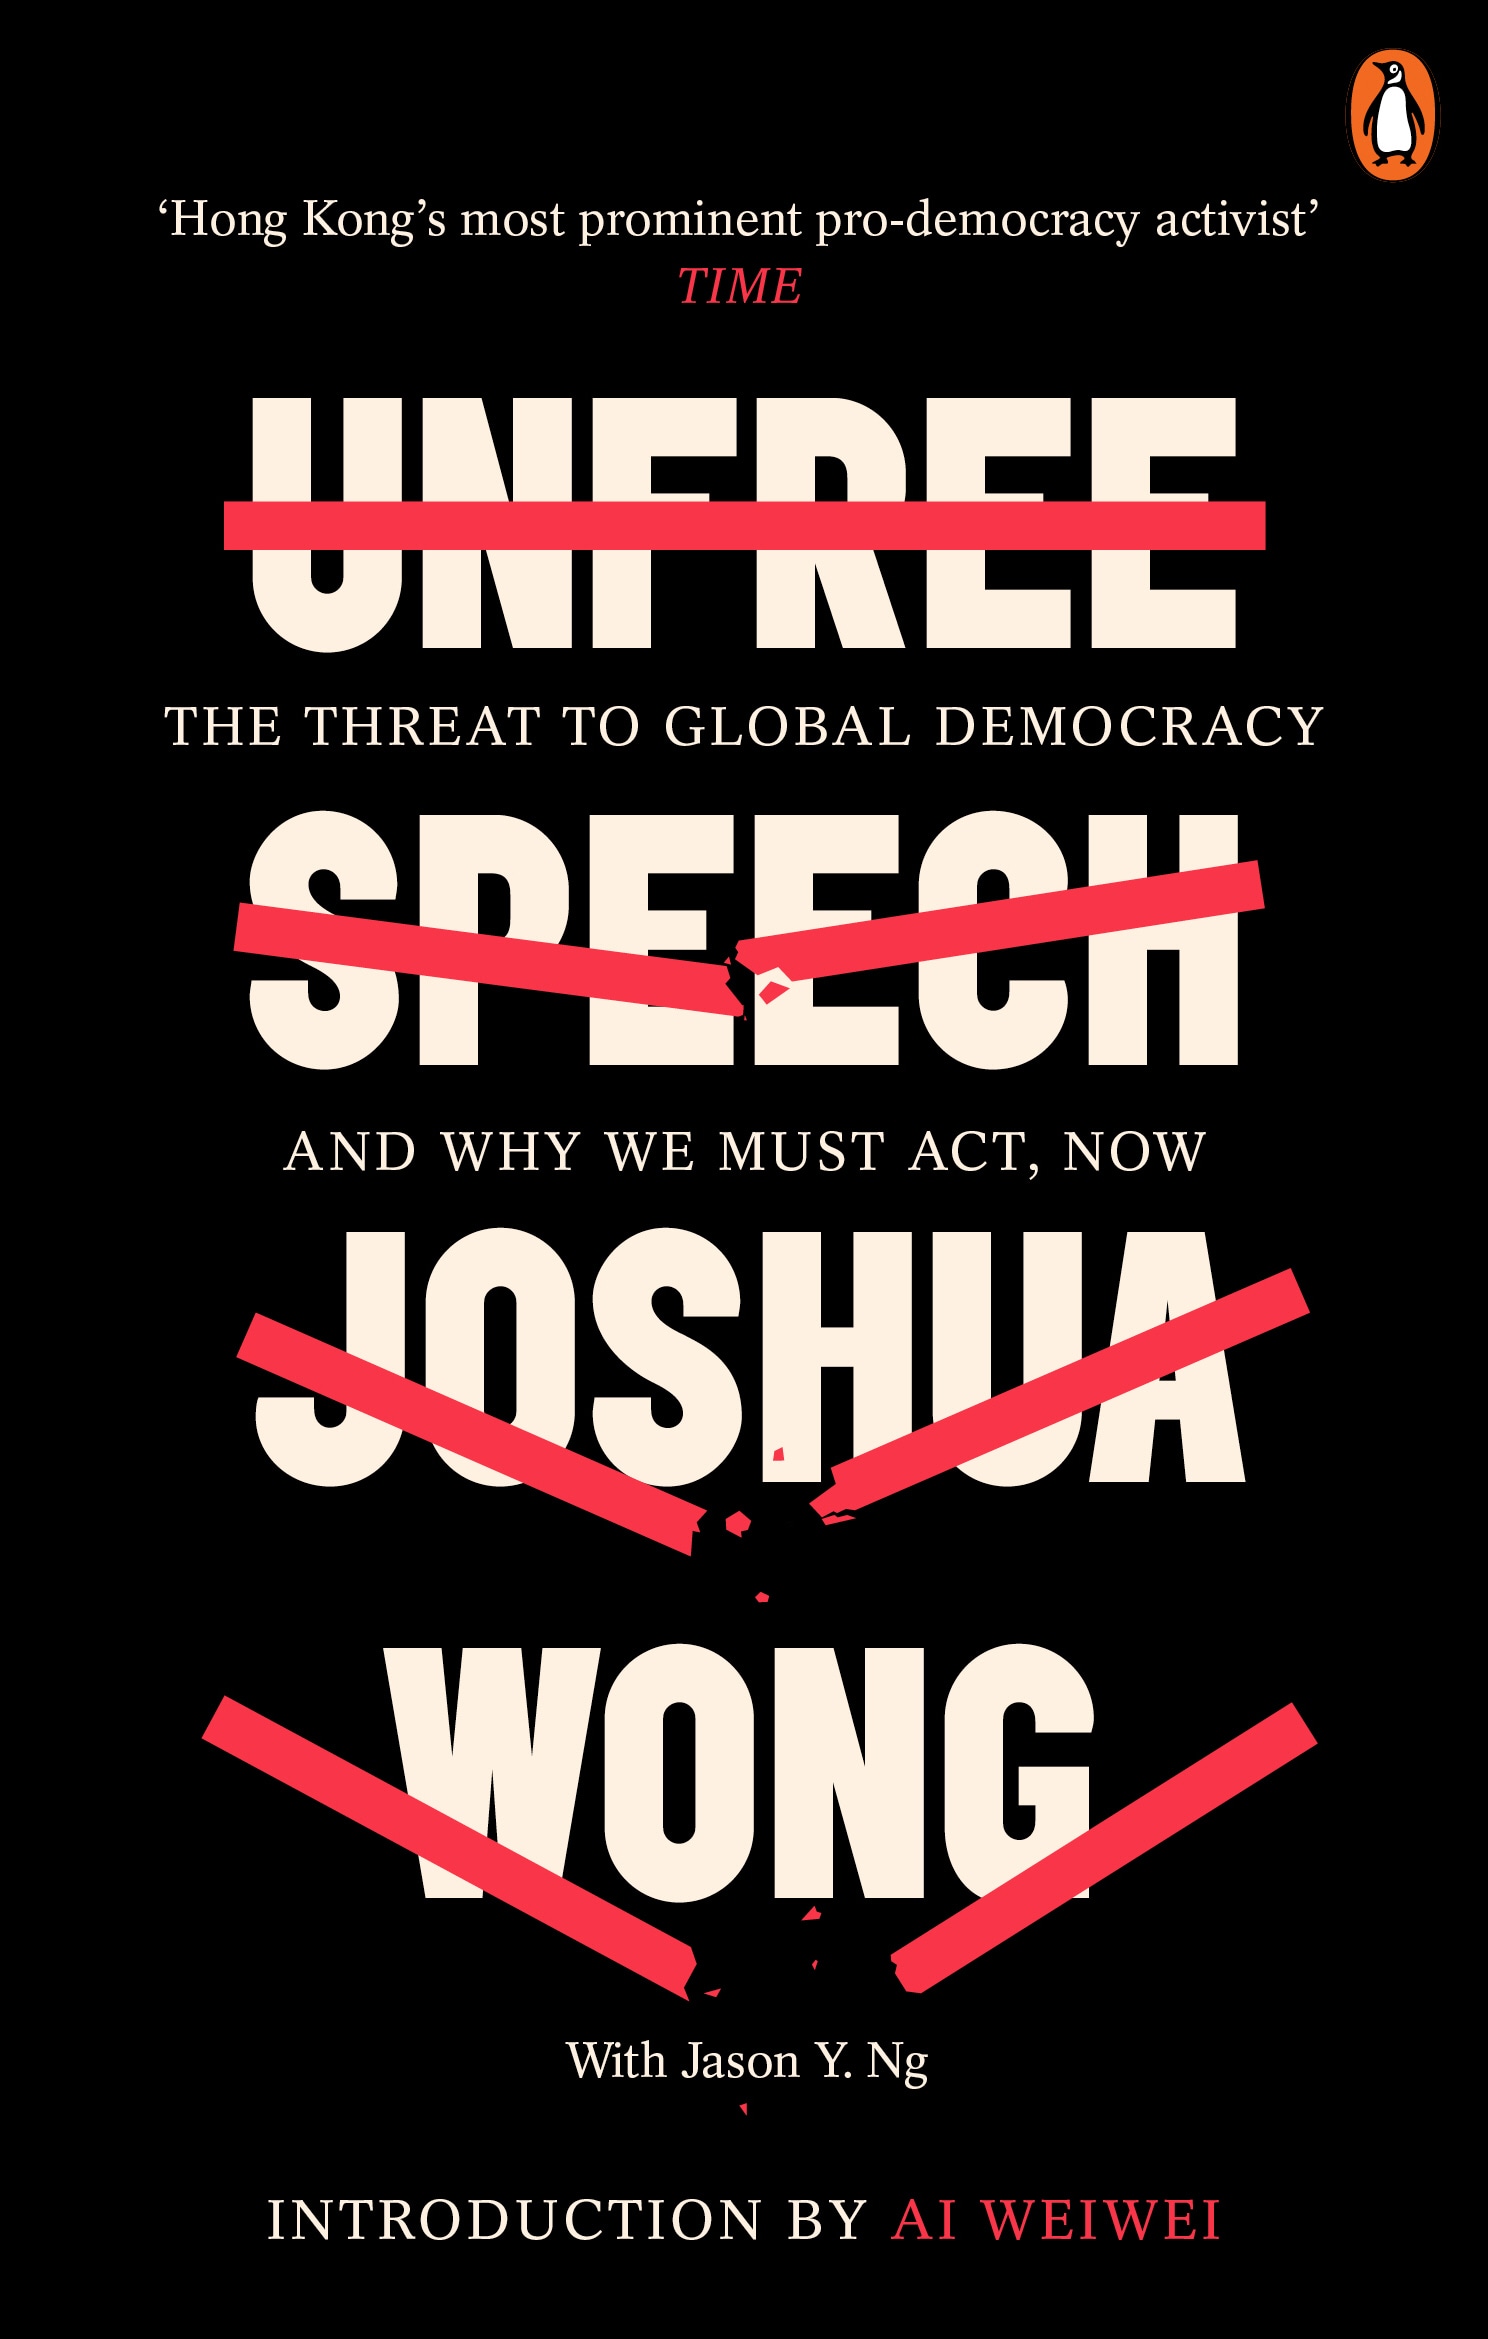 Book “Unfree Speech” by Joshua Wong — February 6, 2020